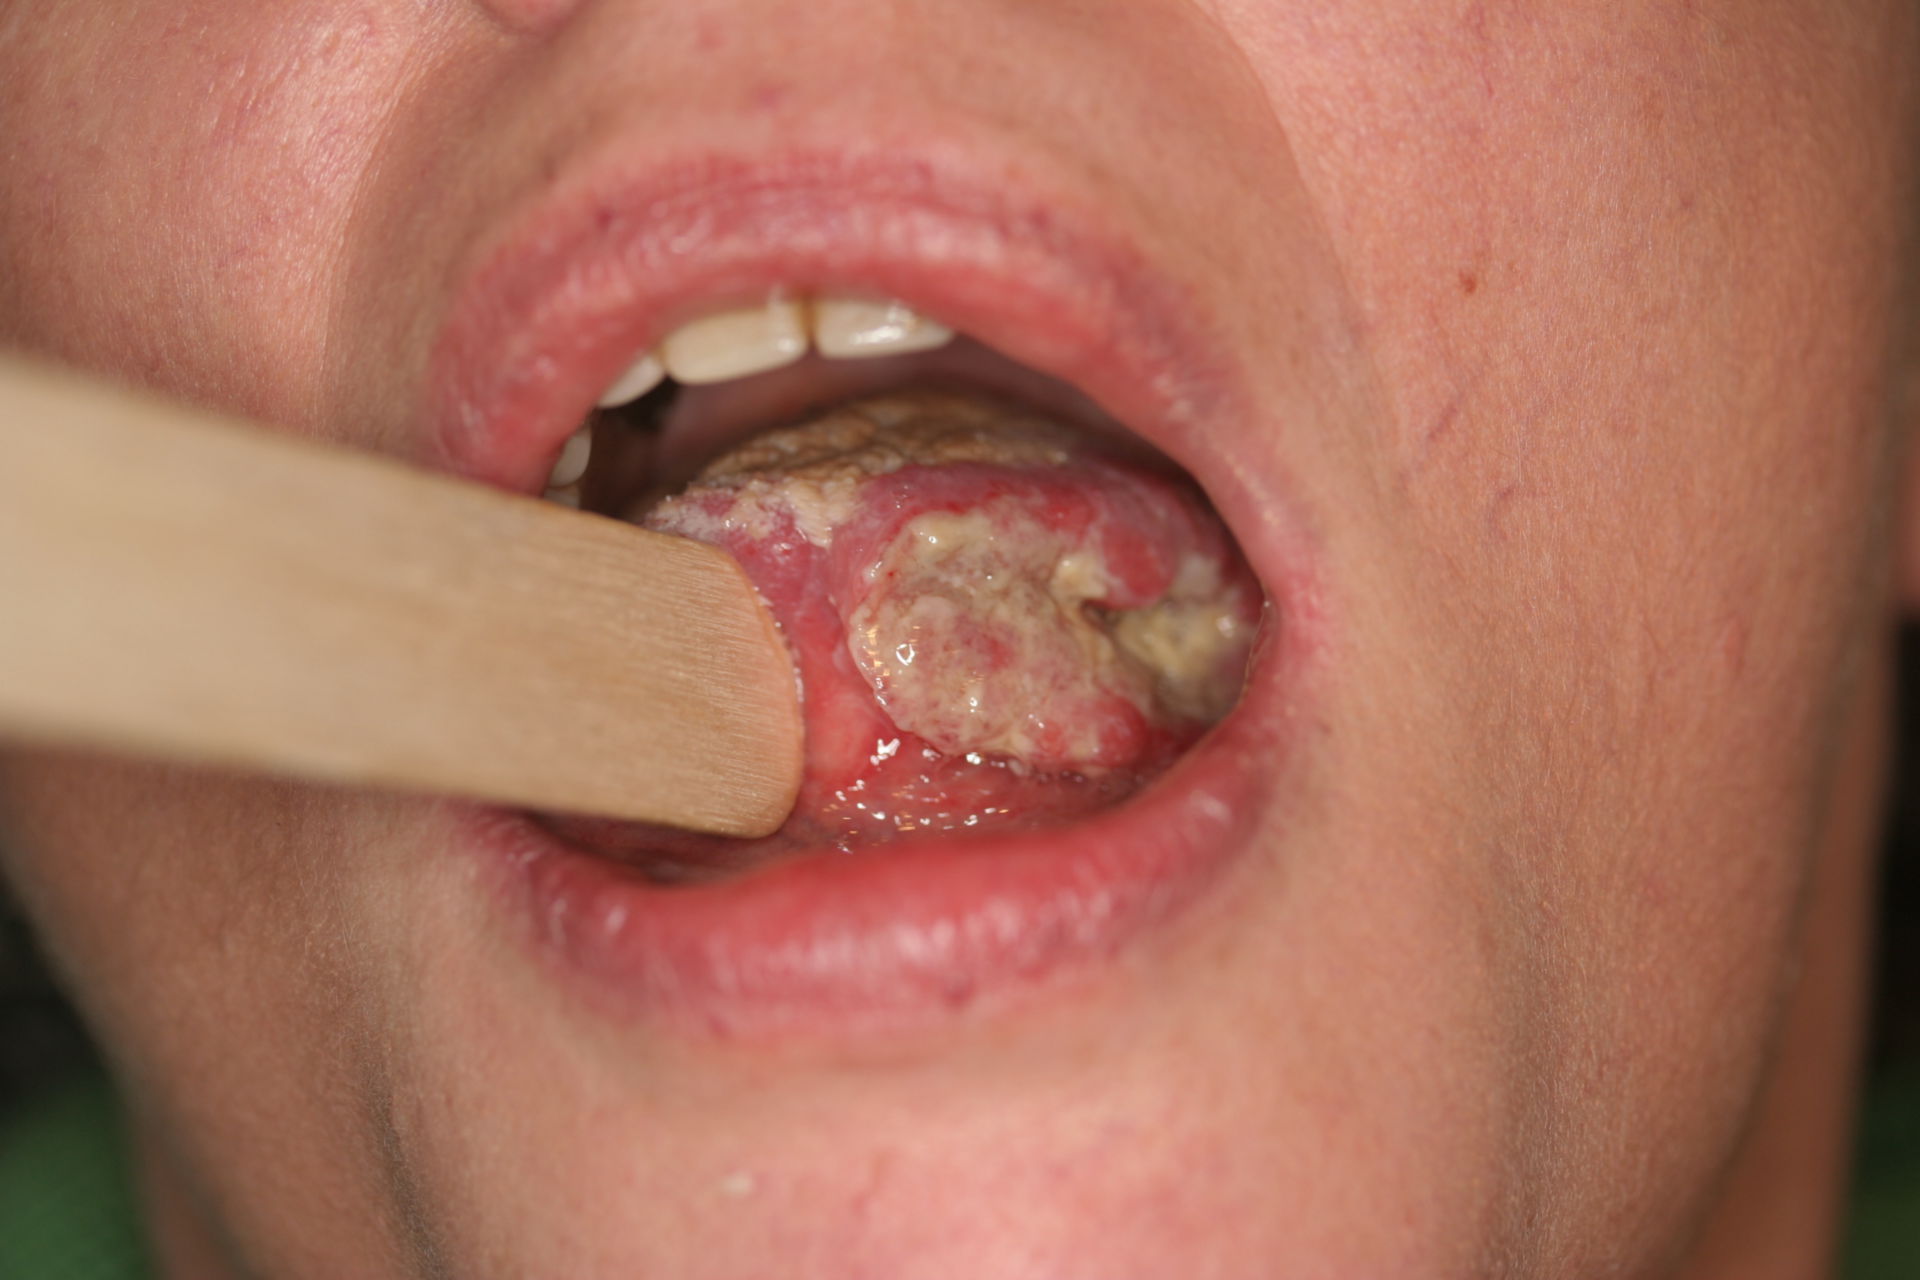 Cancer oral